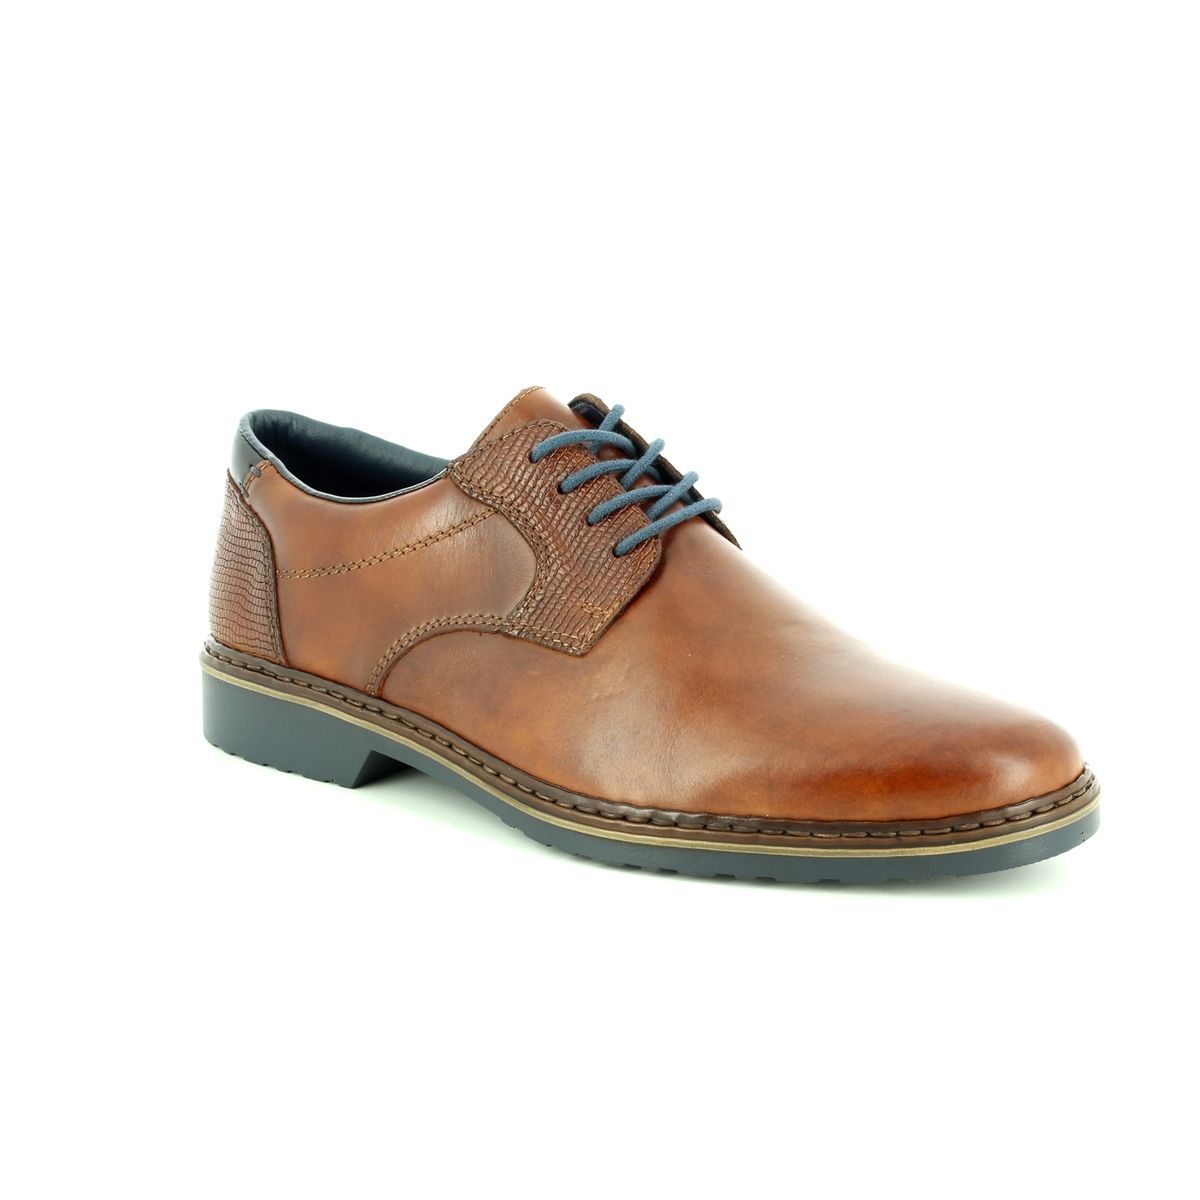 Rieker 16541-25 Tan multi formal shoes